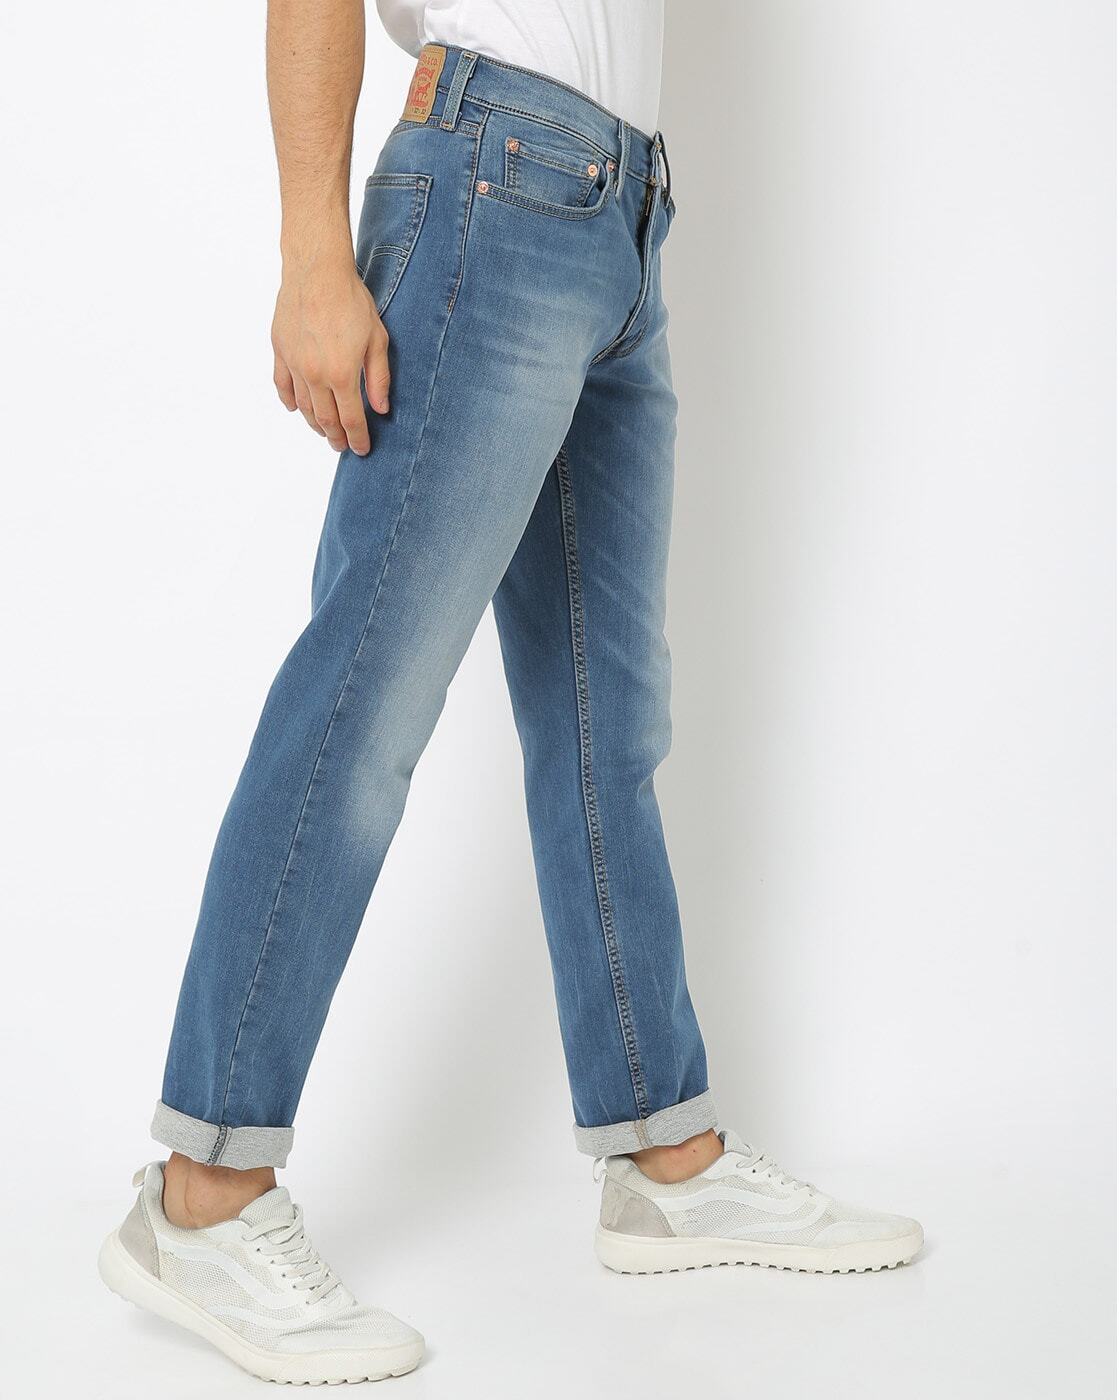 MB 511 Mid-Wash Slim Fit Jeans-18298-1005